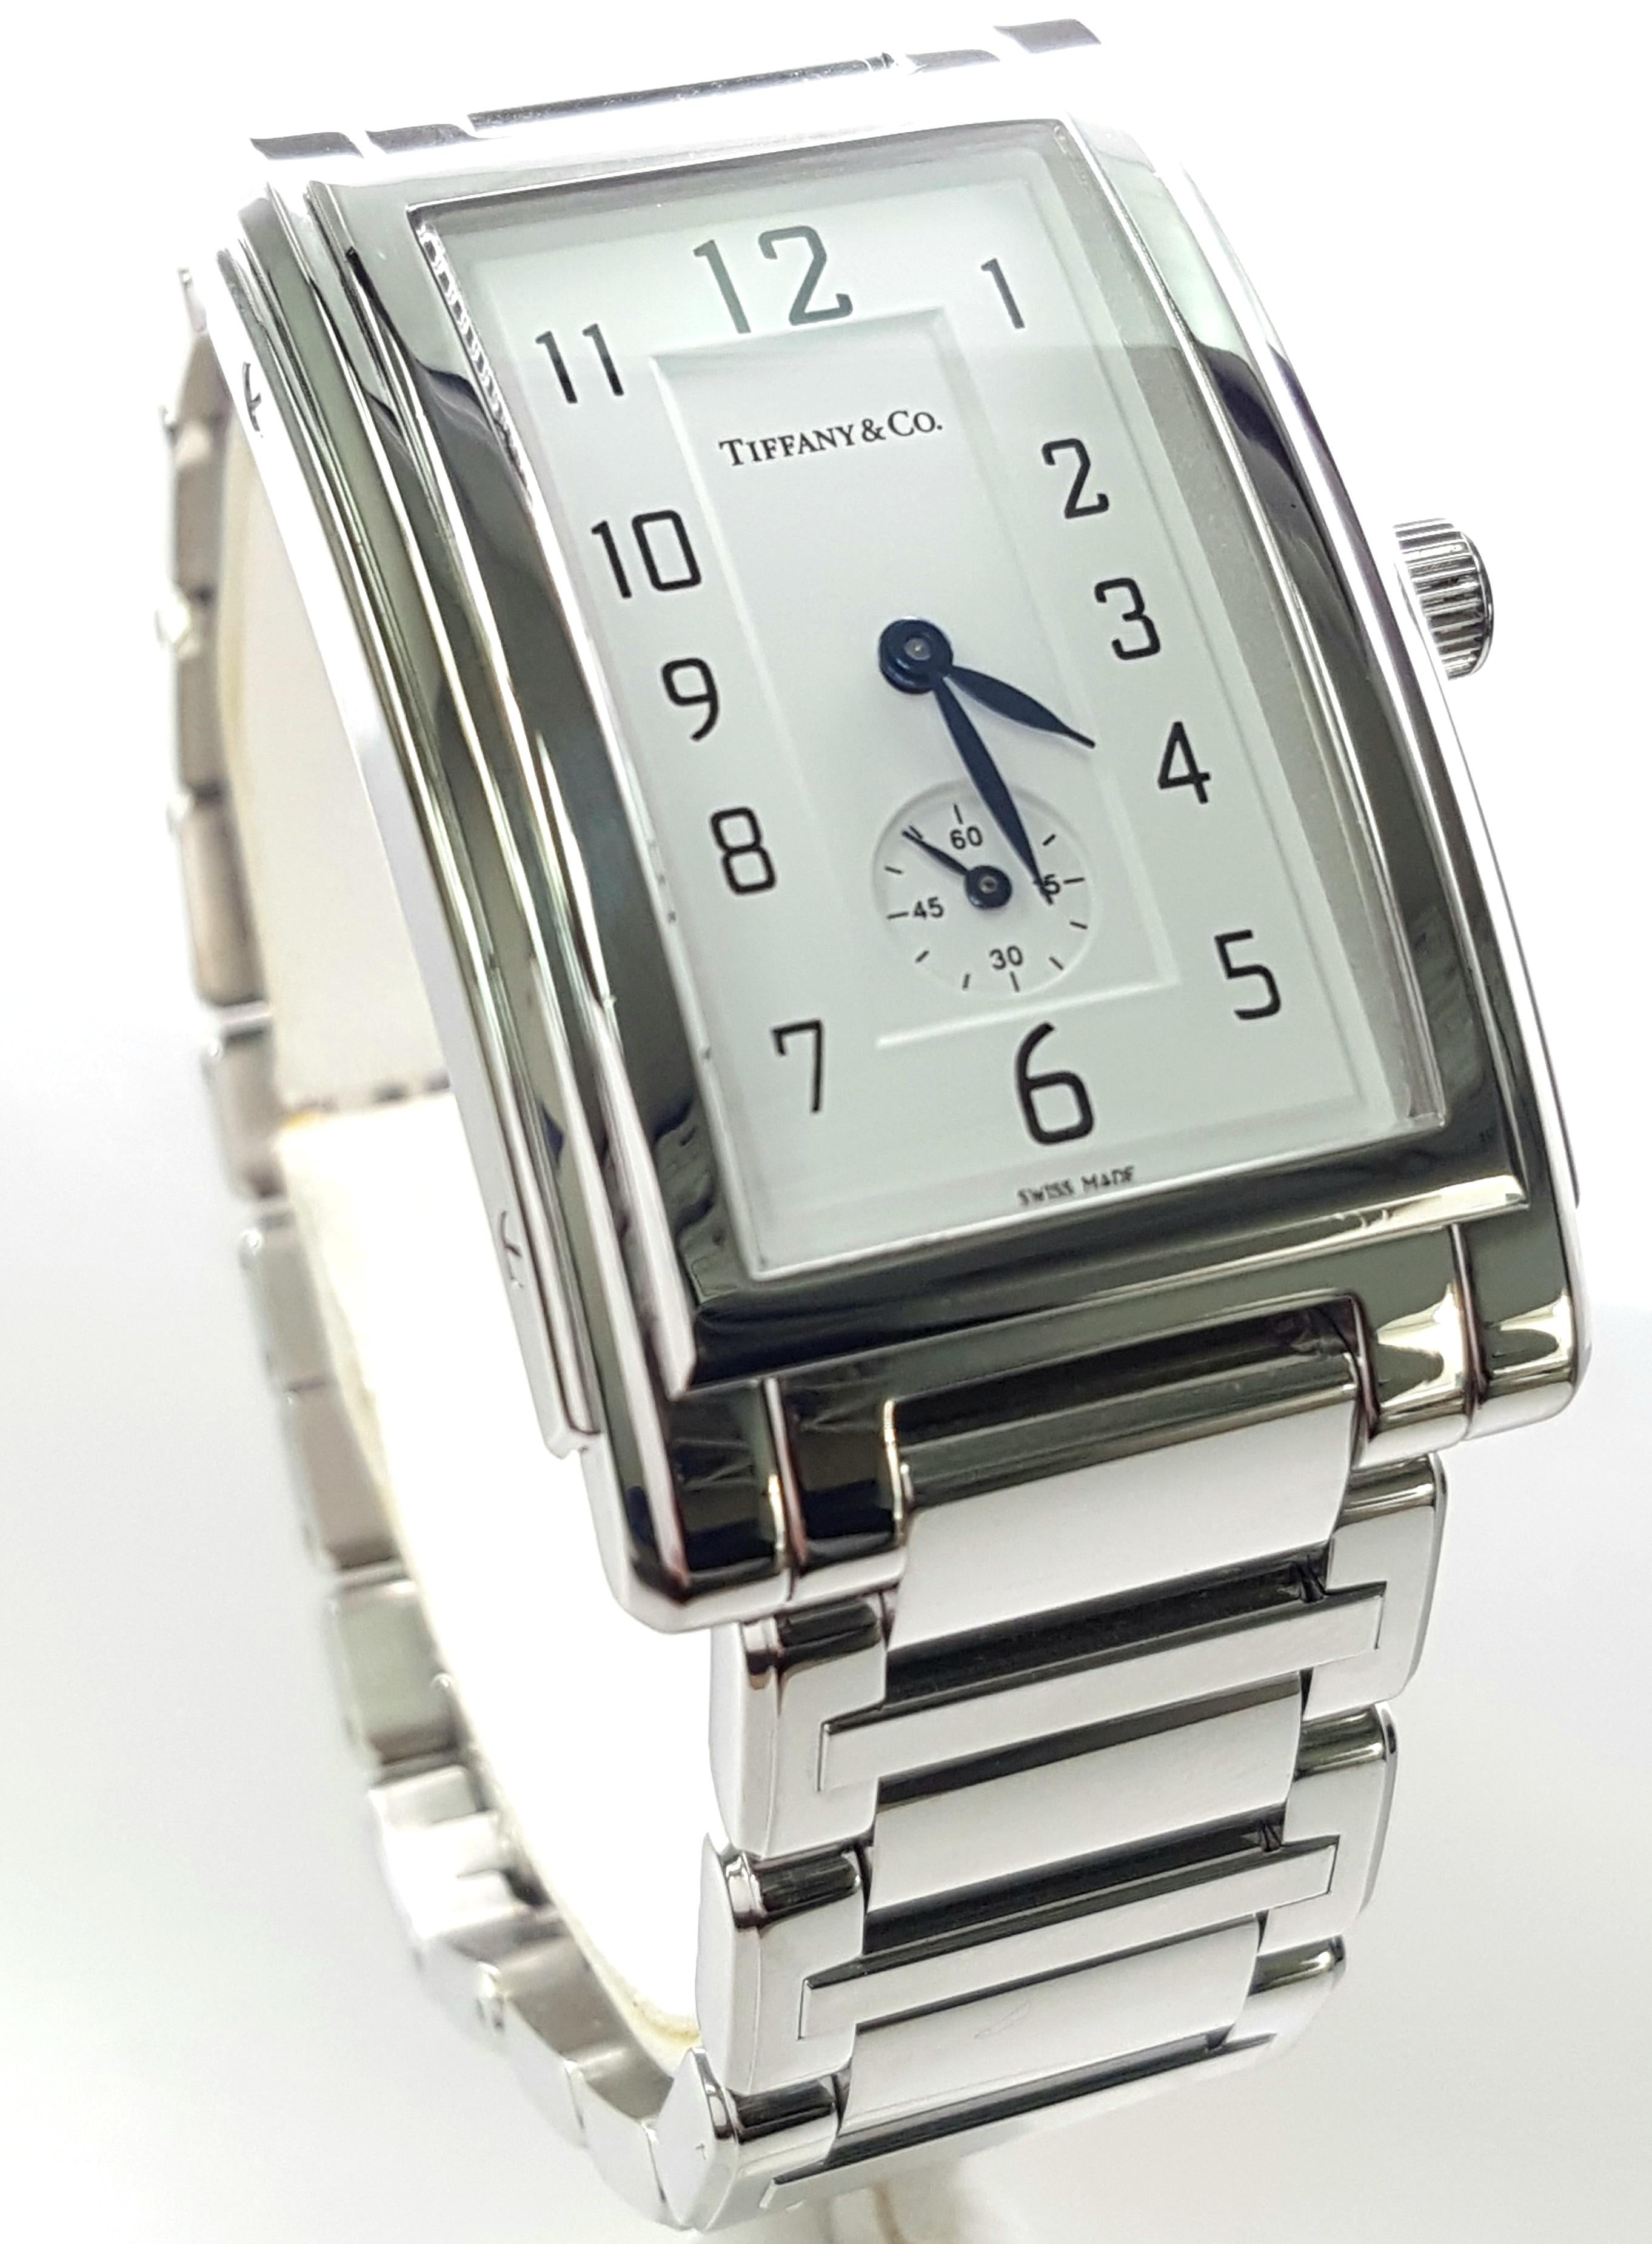 Uncut Tiffany & Co Grand Quartz Resonator Quartz Stainless Wristwatch